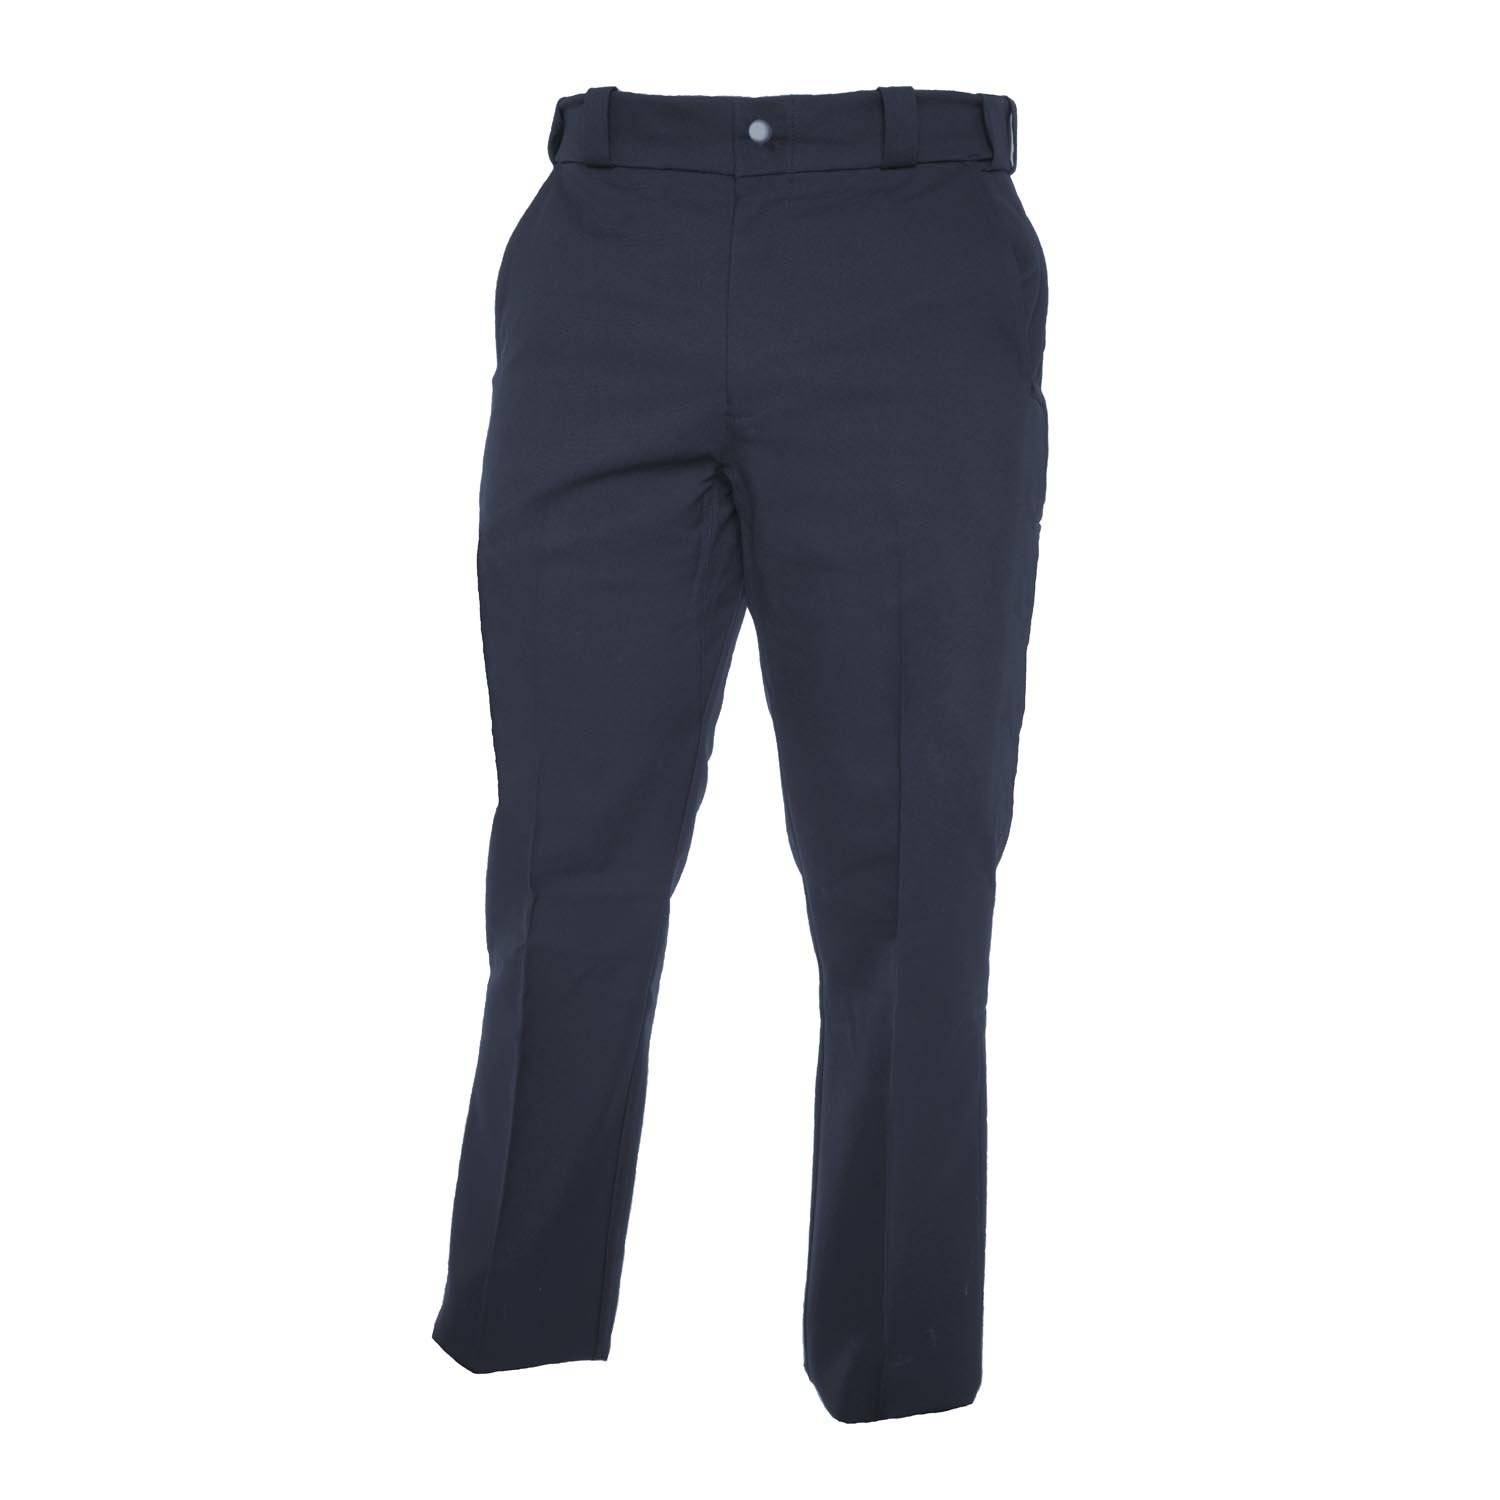 Elbeco Men's CX360 Cargo Pants 5-Pocket Pants